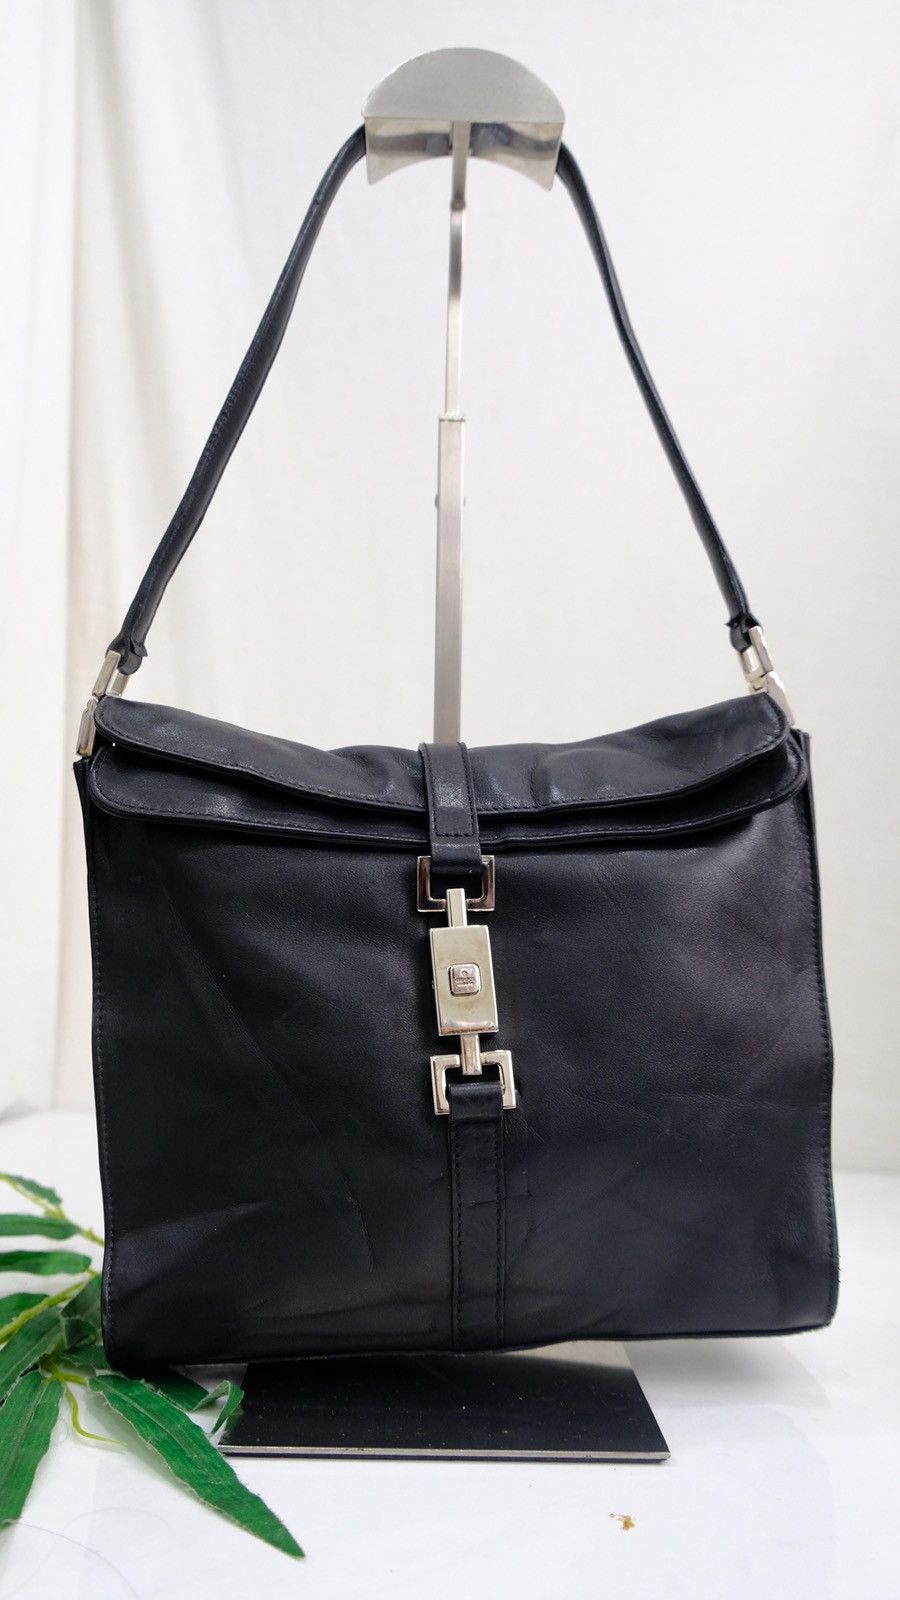 Authentic Gucci Black Jackie Leather Shoulder Bag - 2